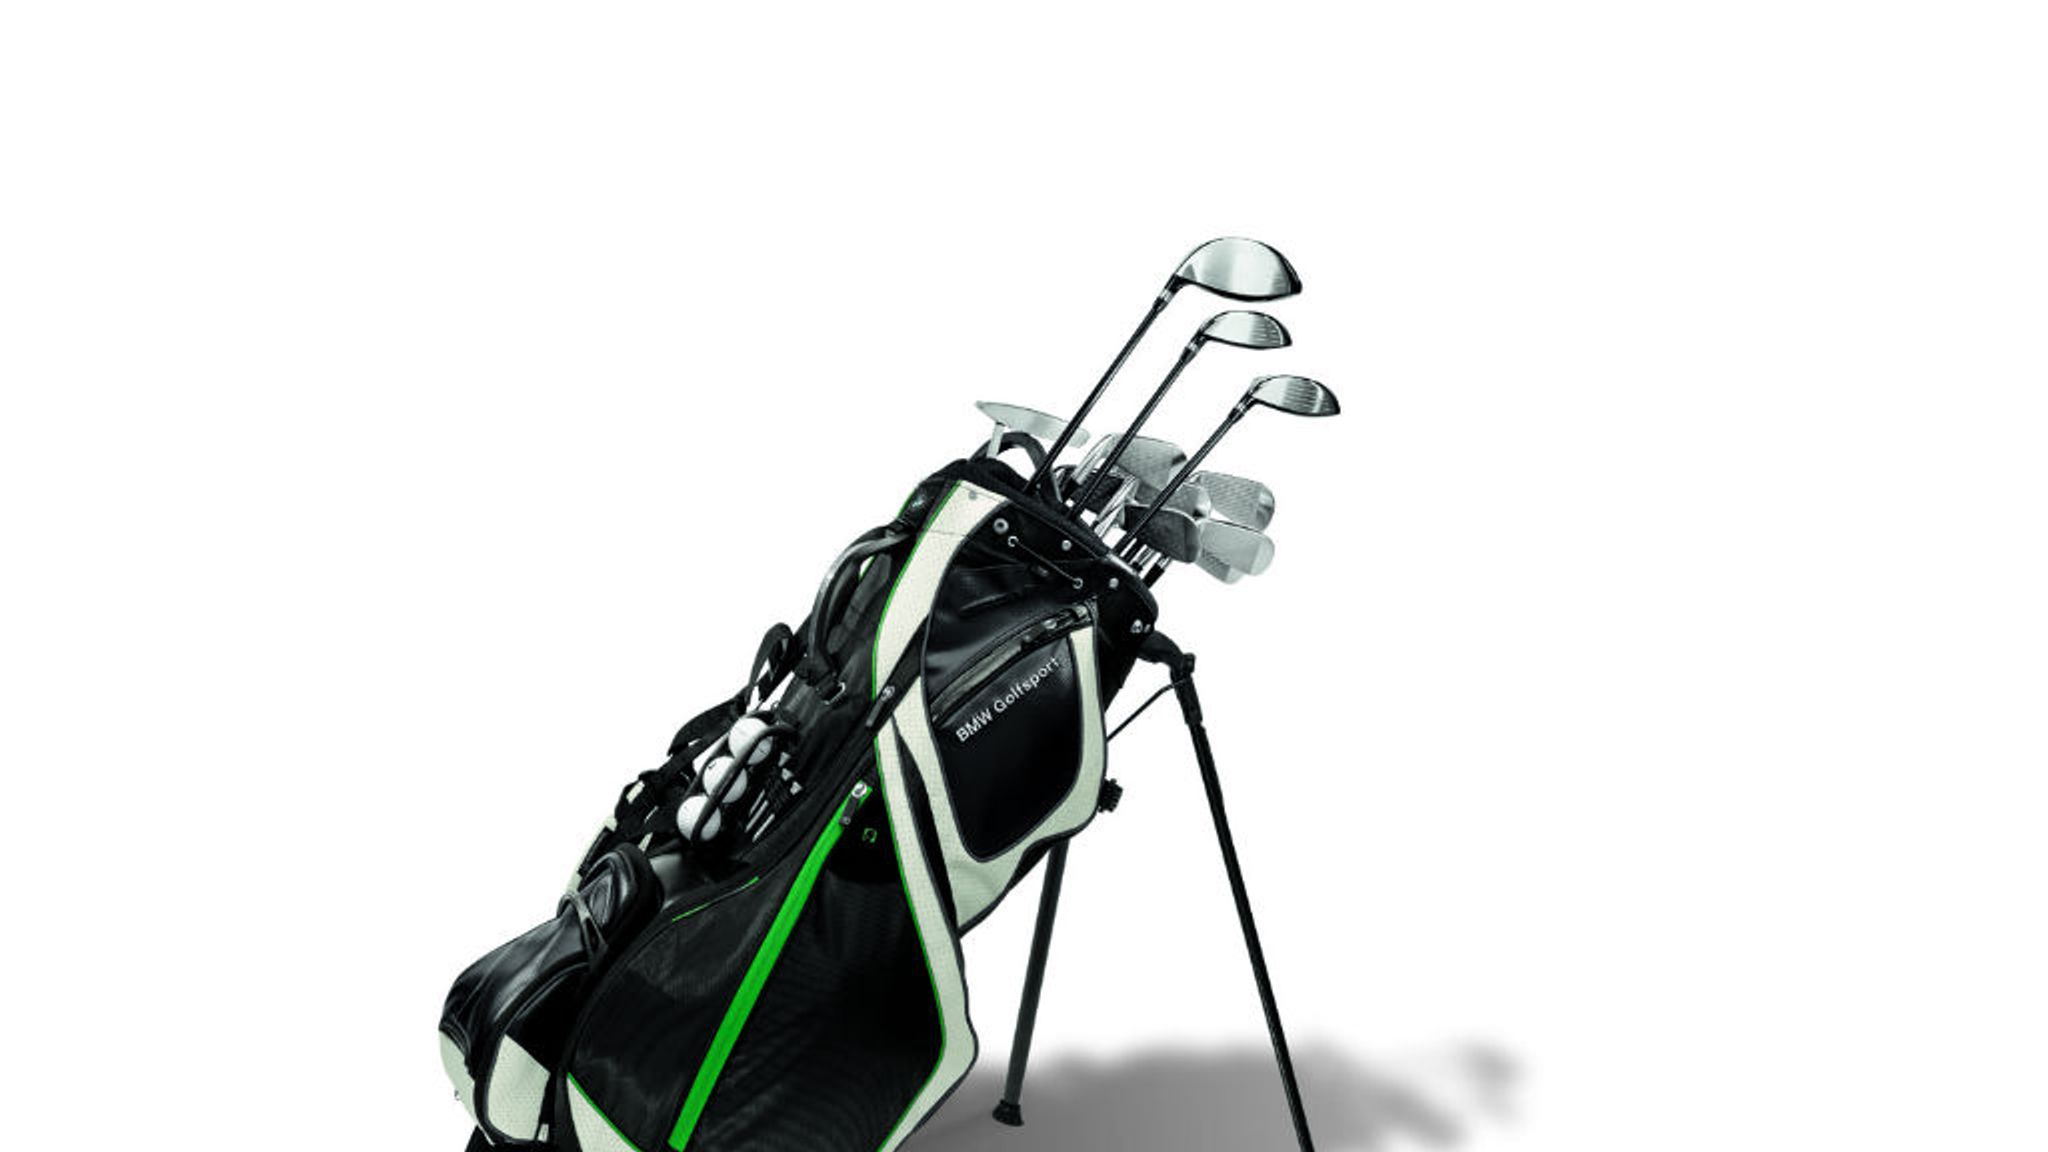 Photo: bmw golfsport golf bag